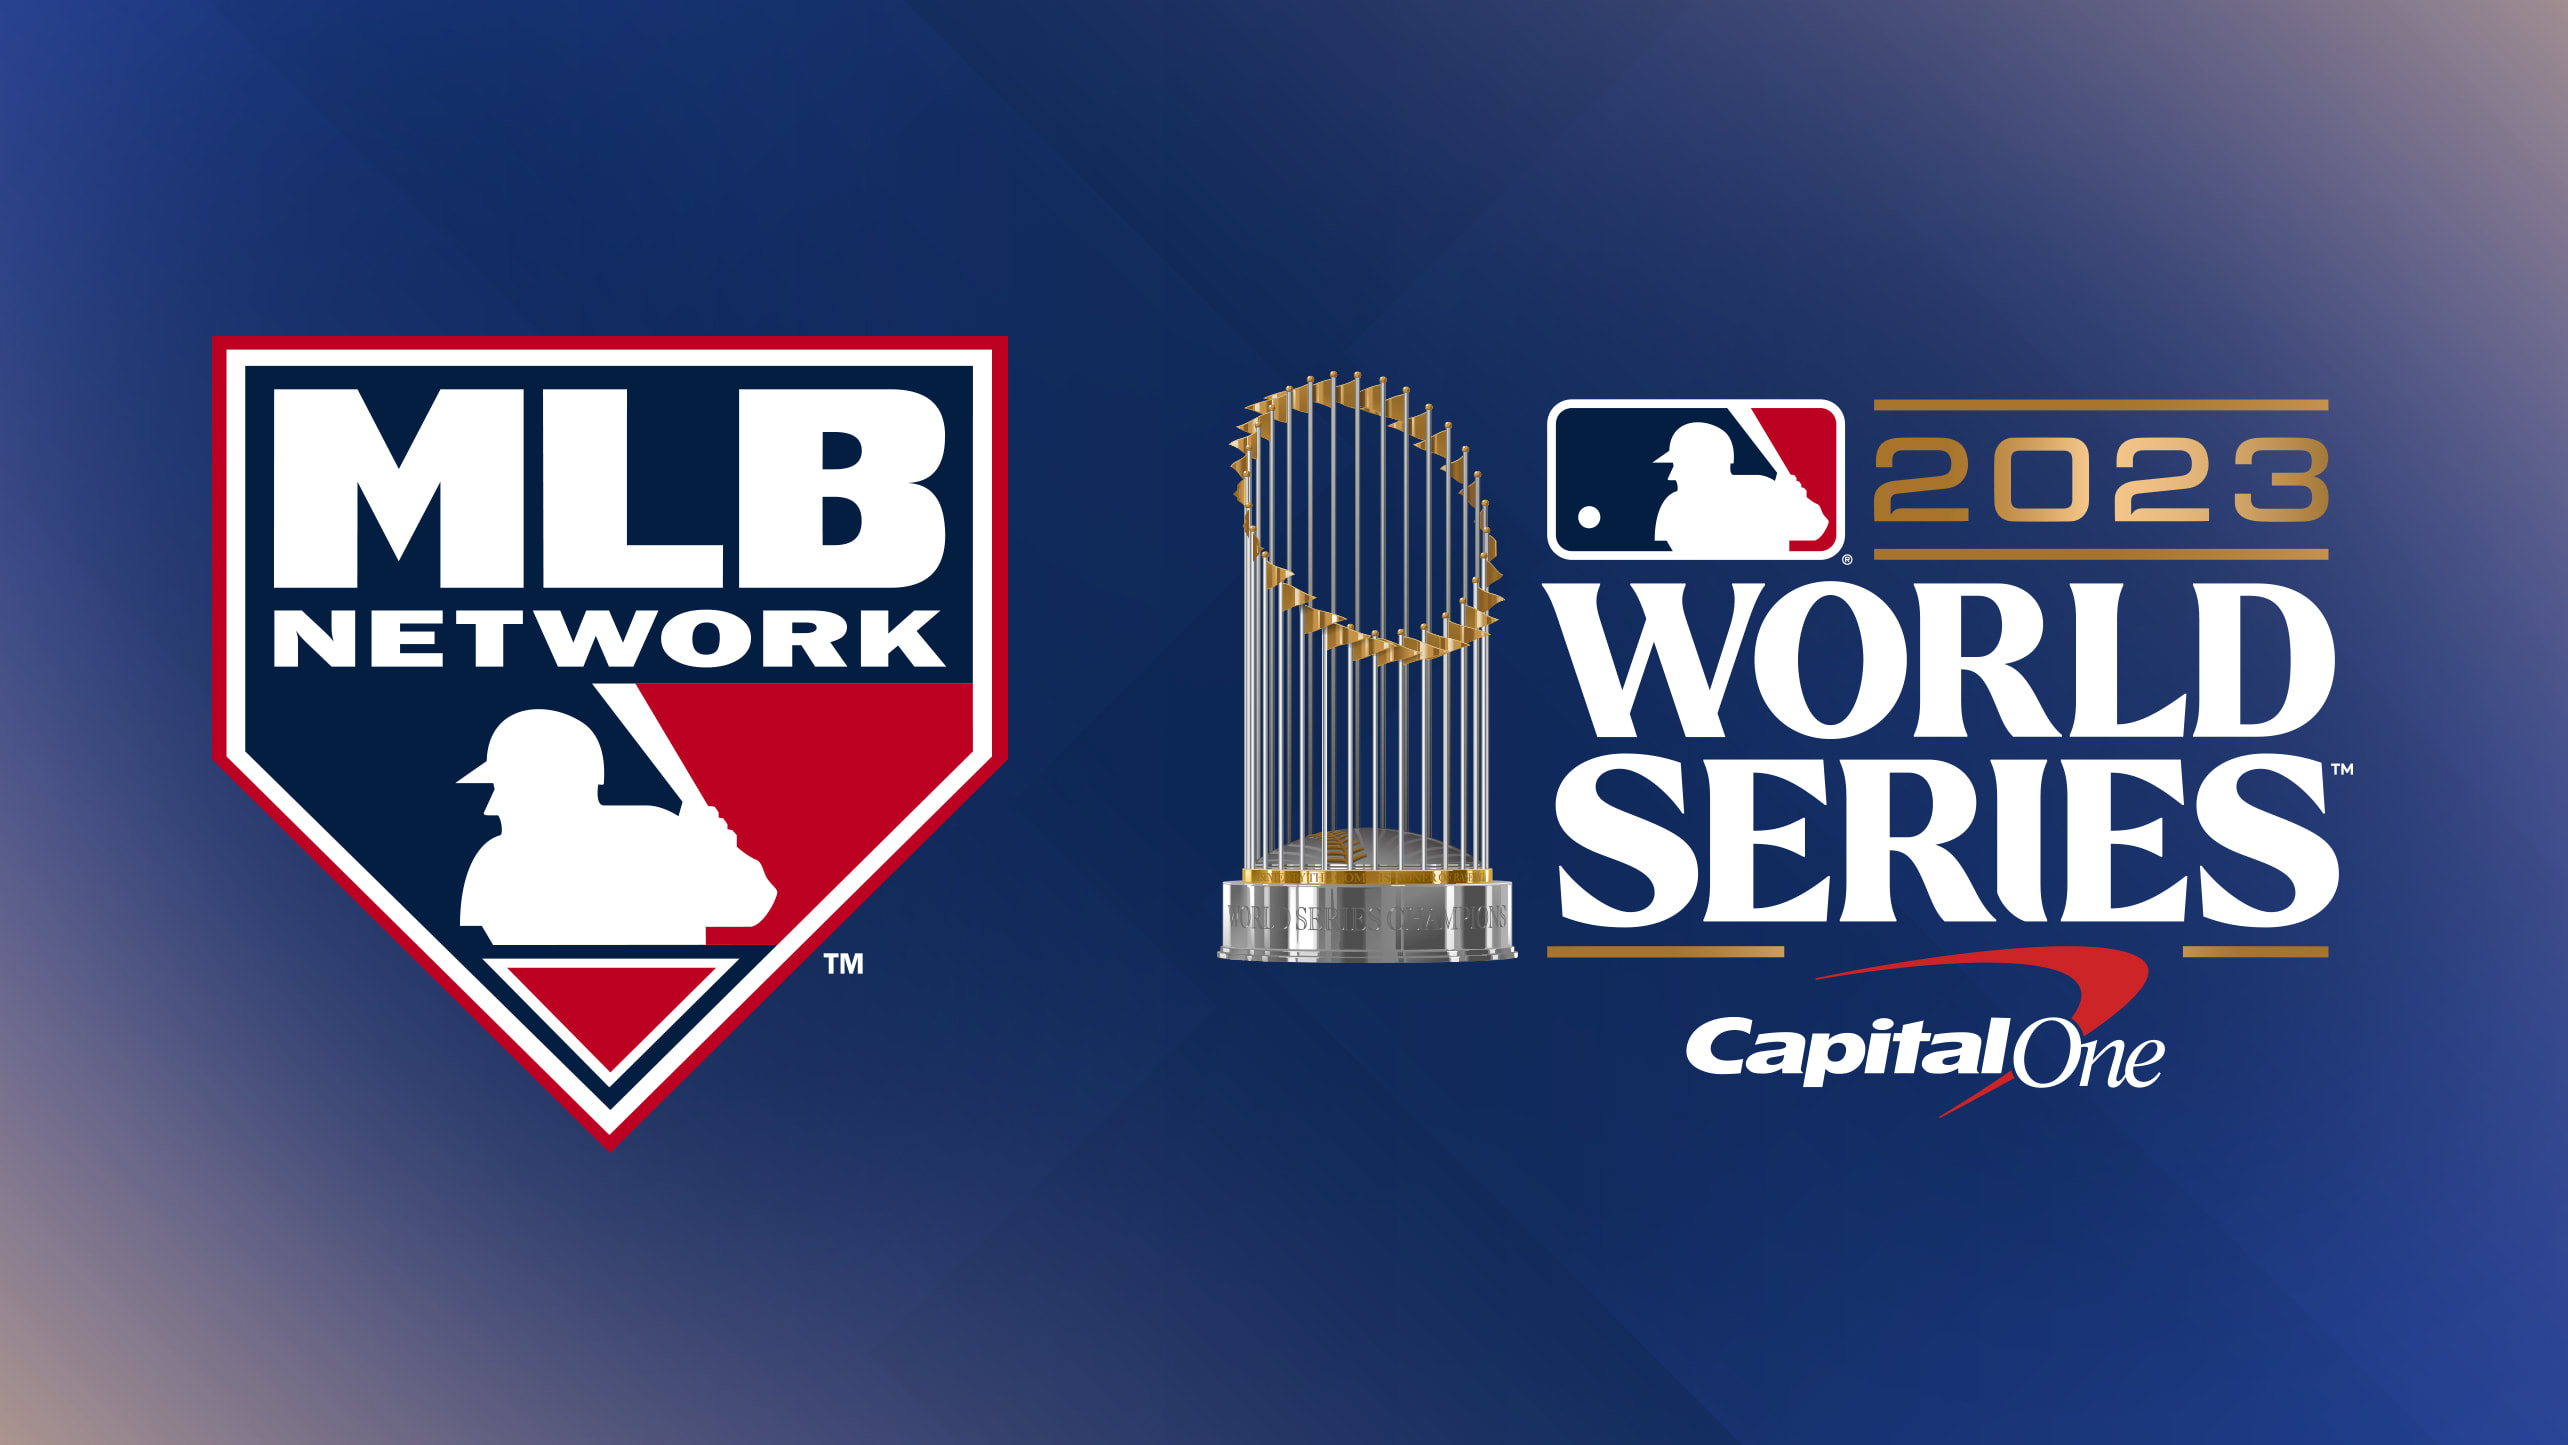 MLB Network logo Network and World Series logos